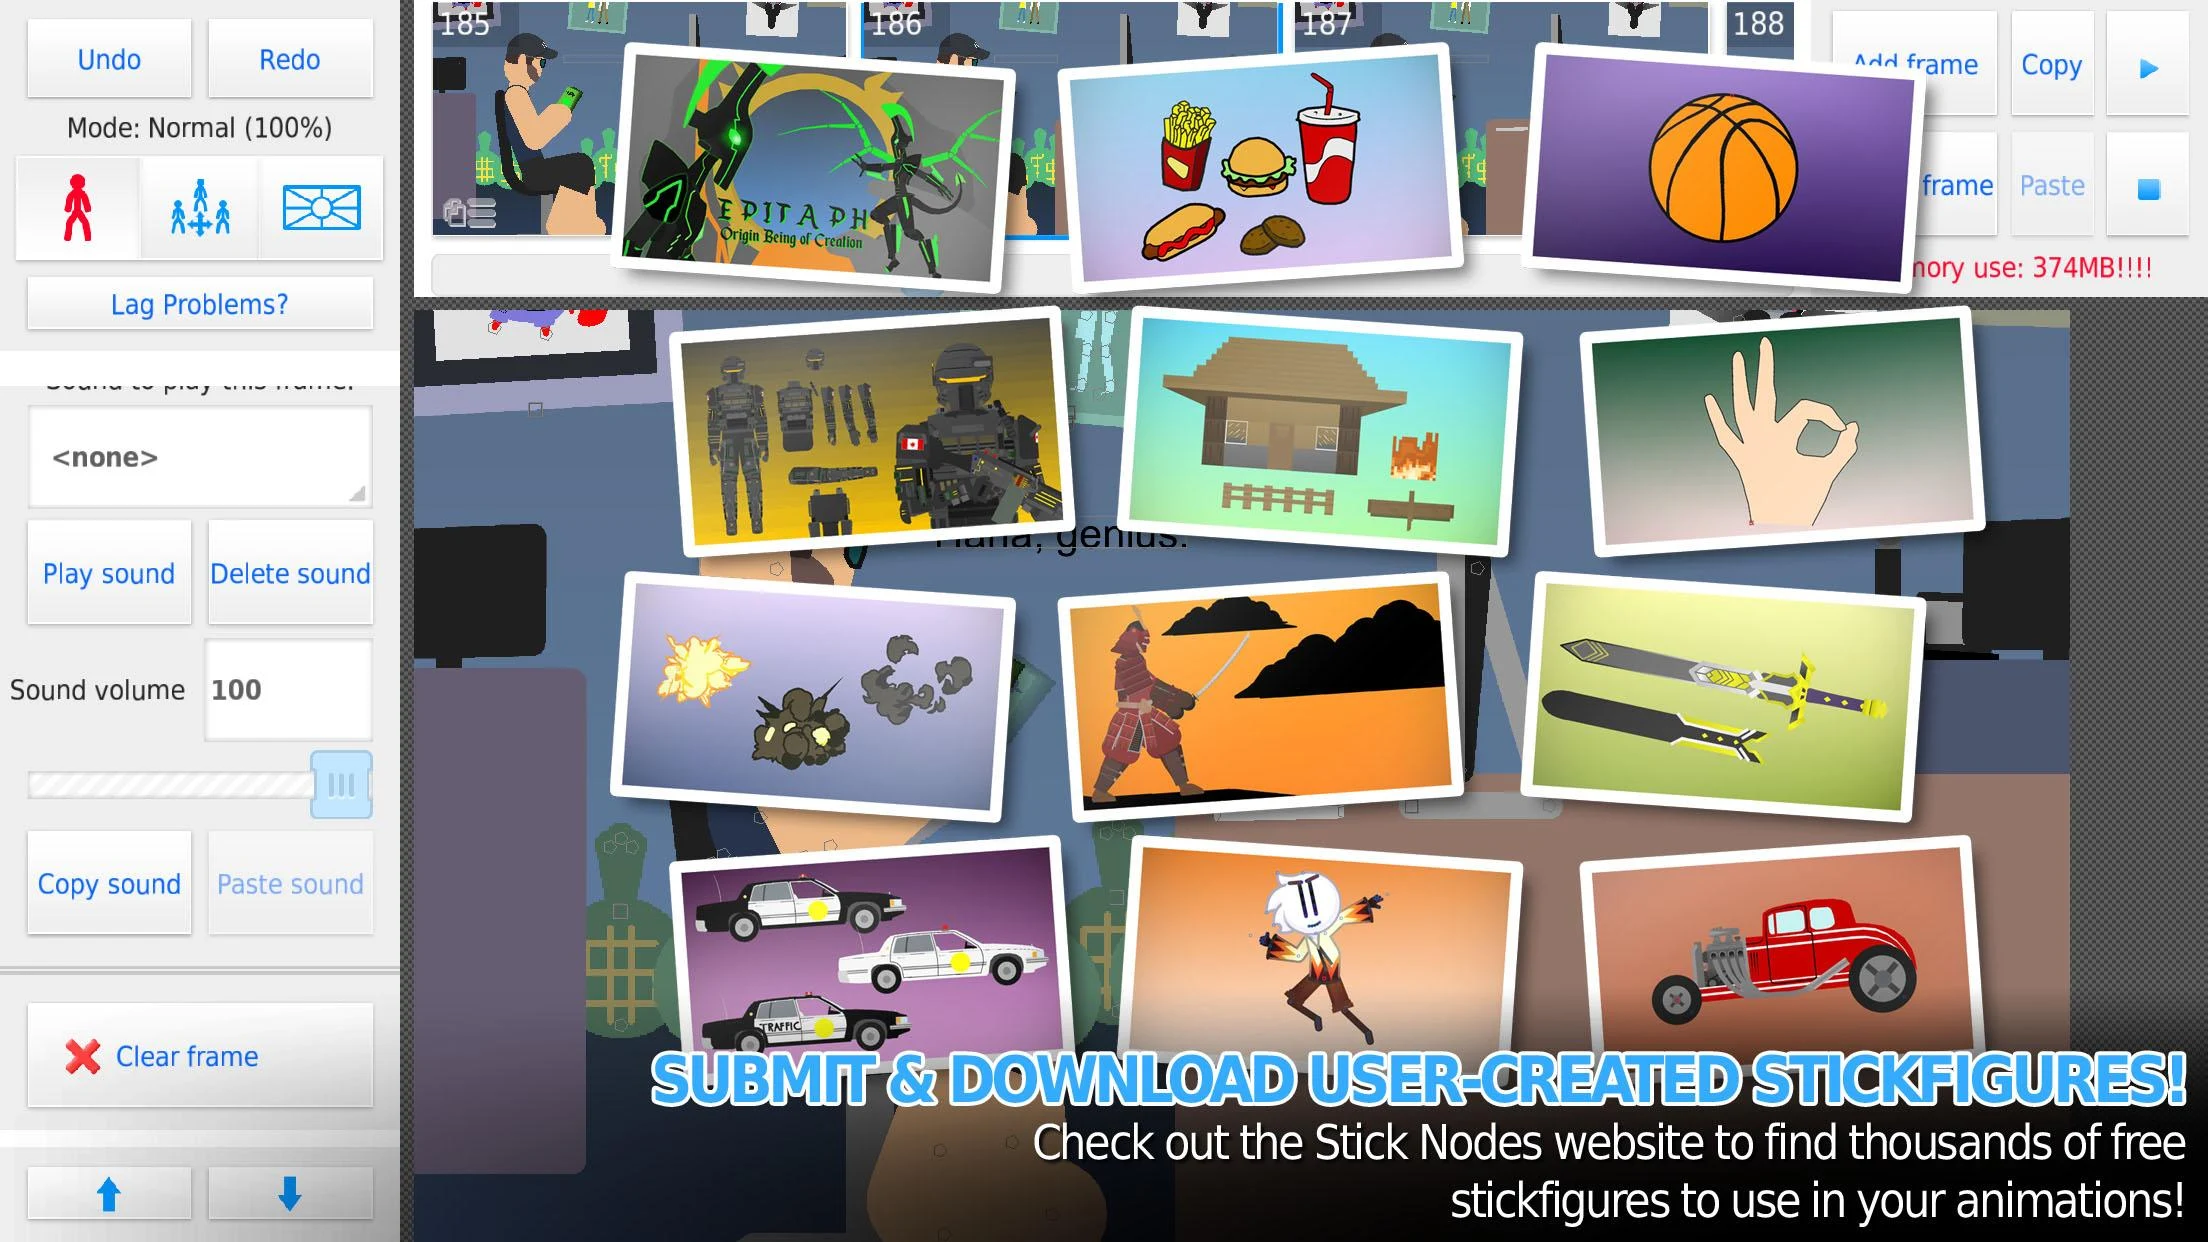 Download Stick Nodes Pro - Animator App Free on PC (Emulator) - LDPlayer